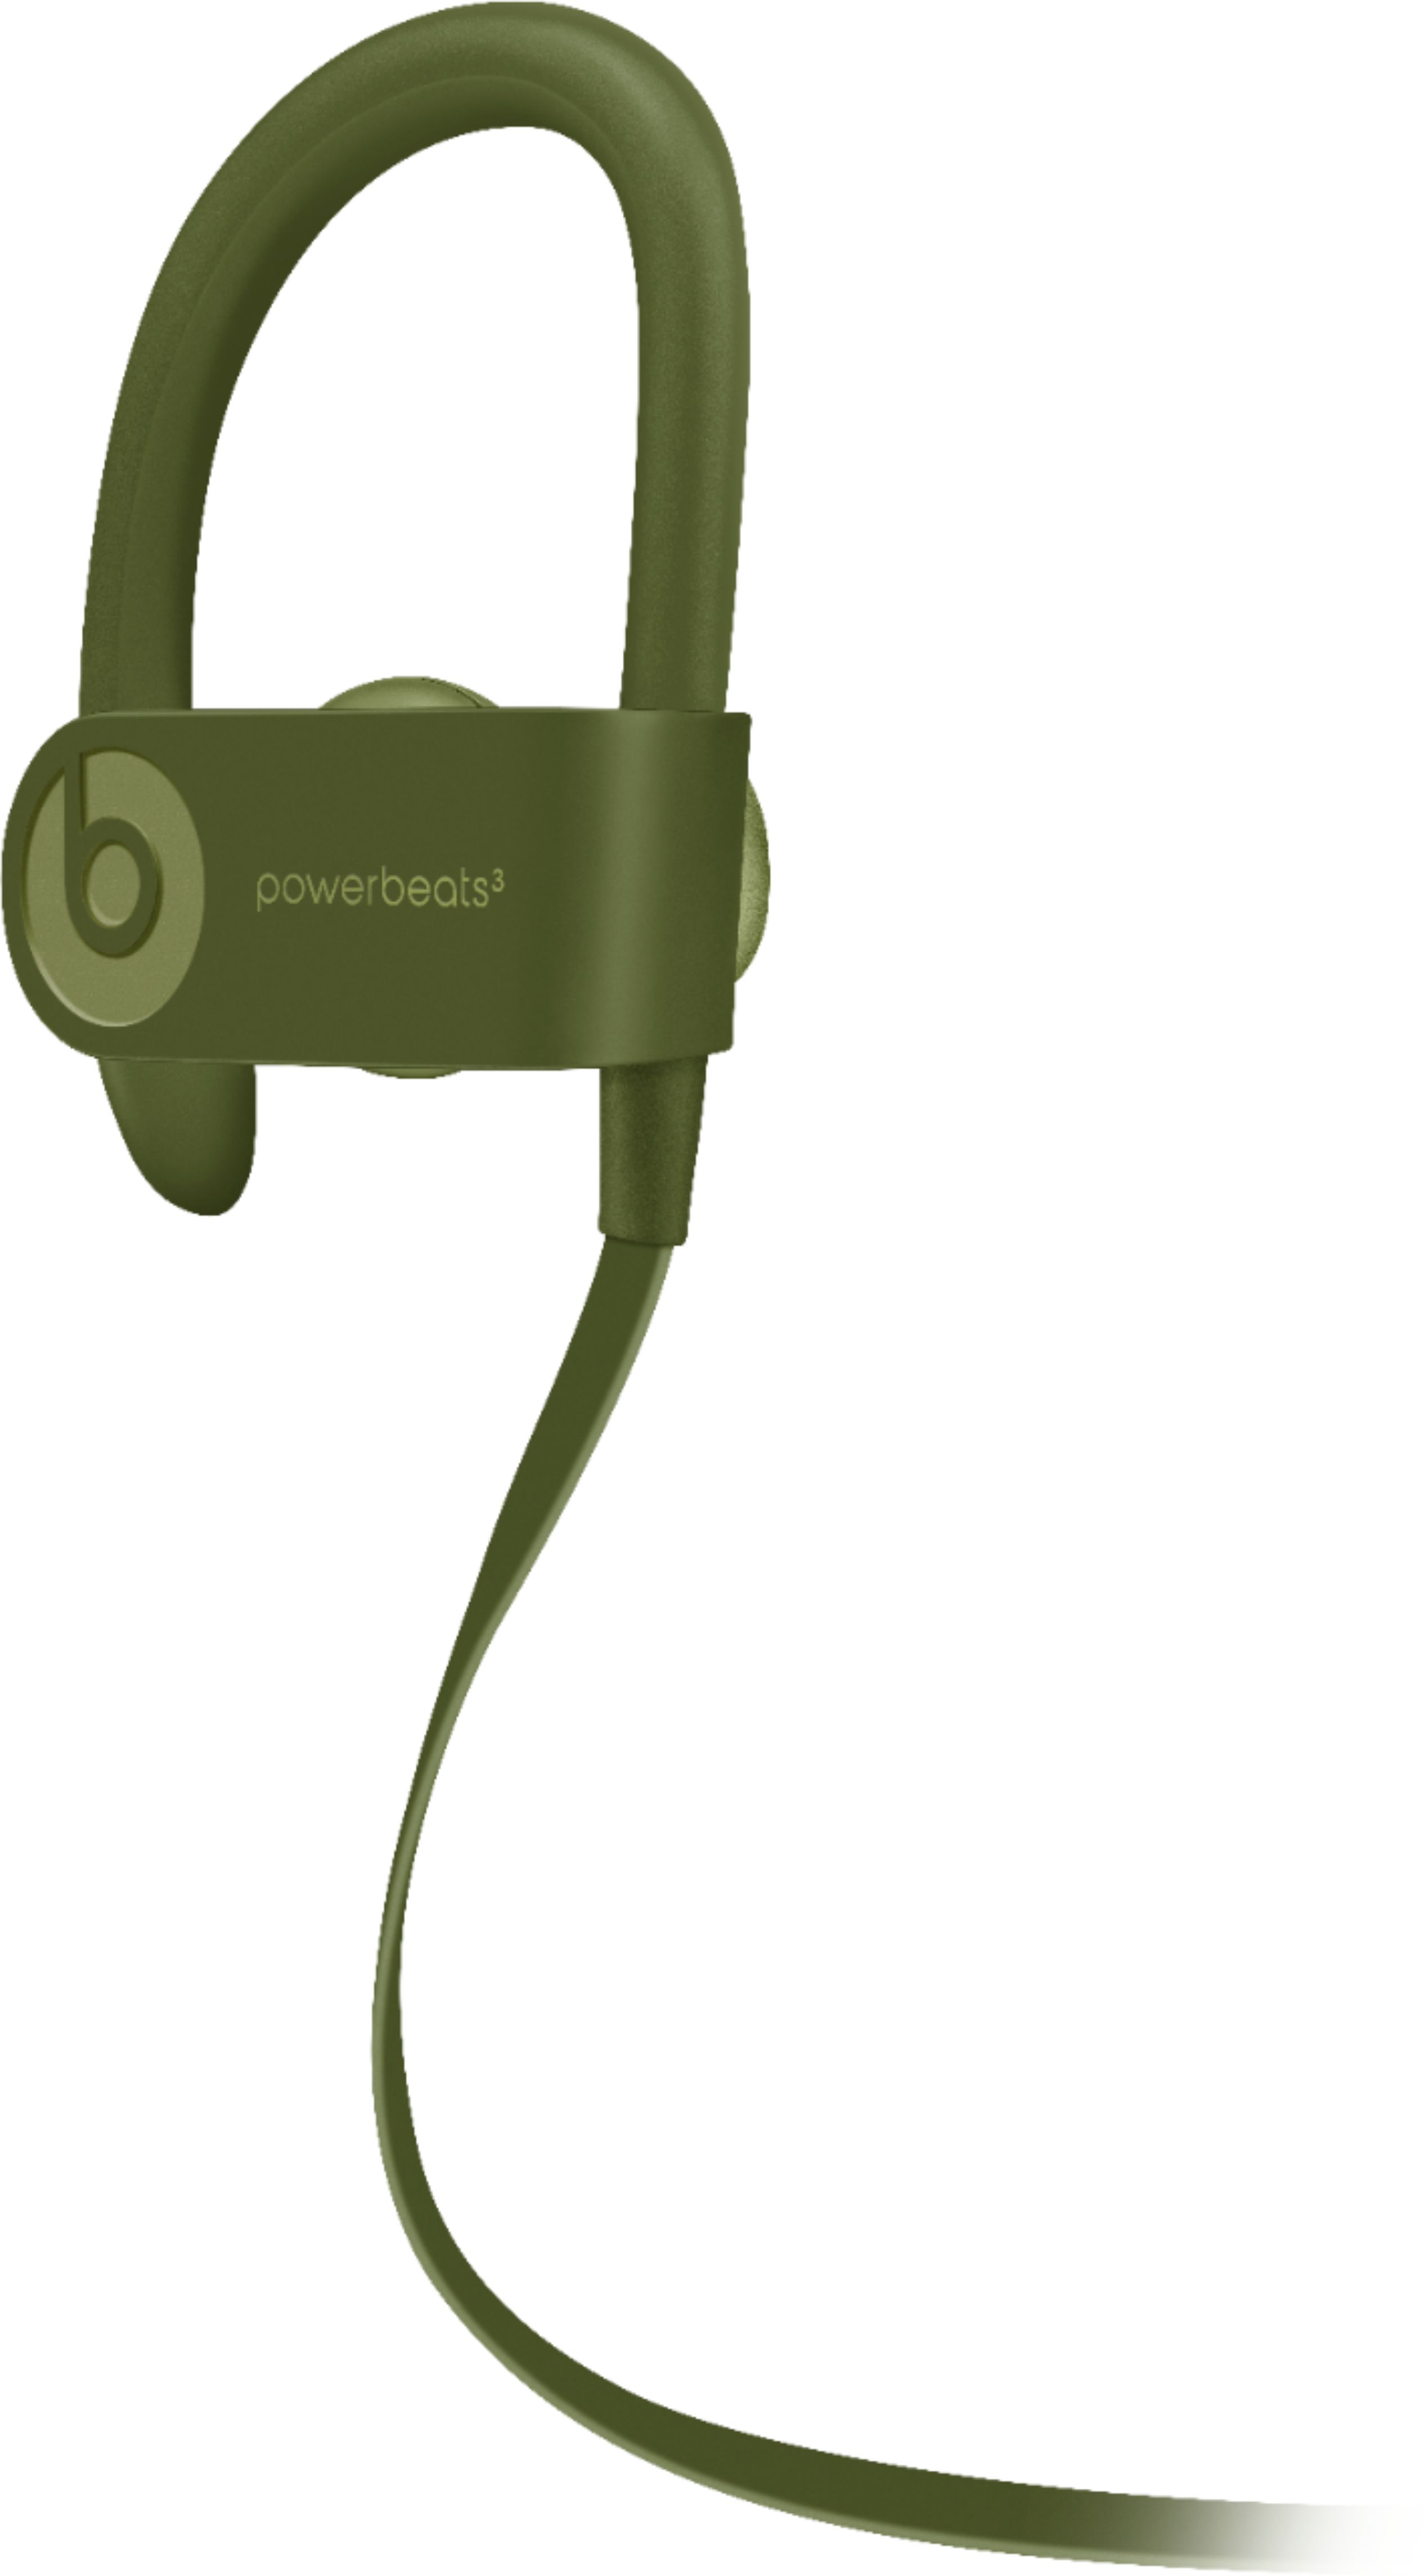 powerbeats 3 ear tips green